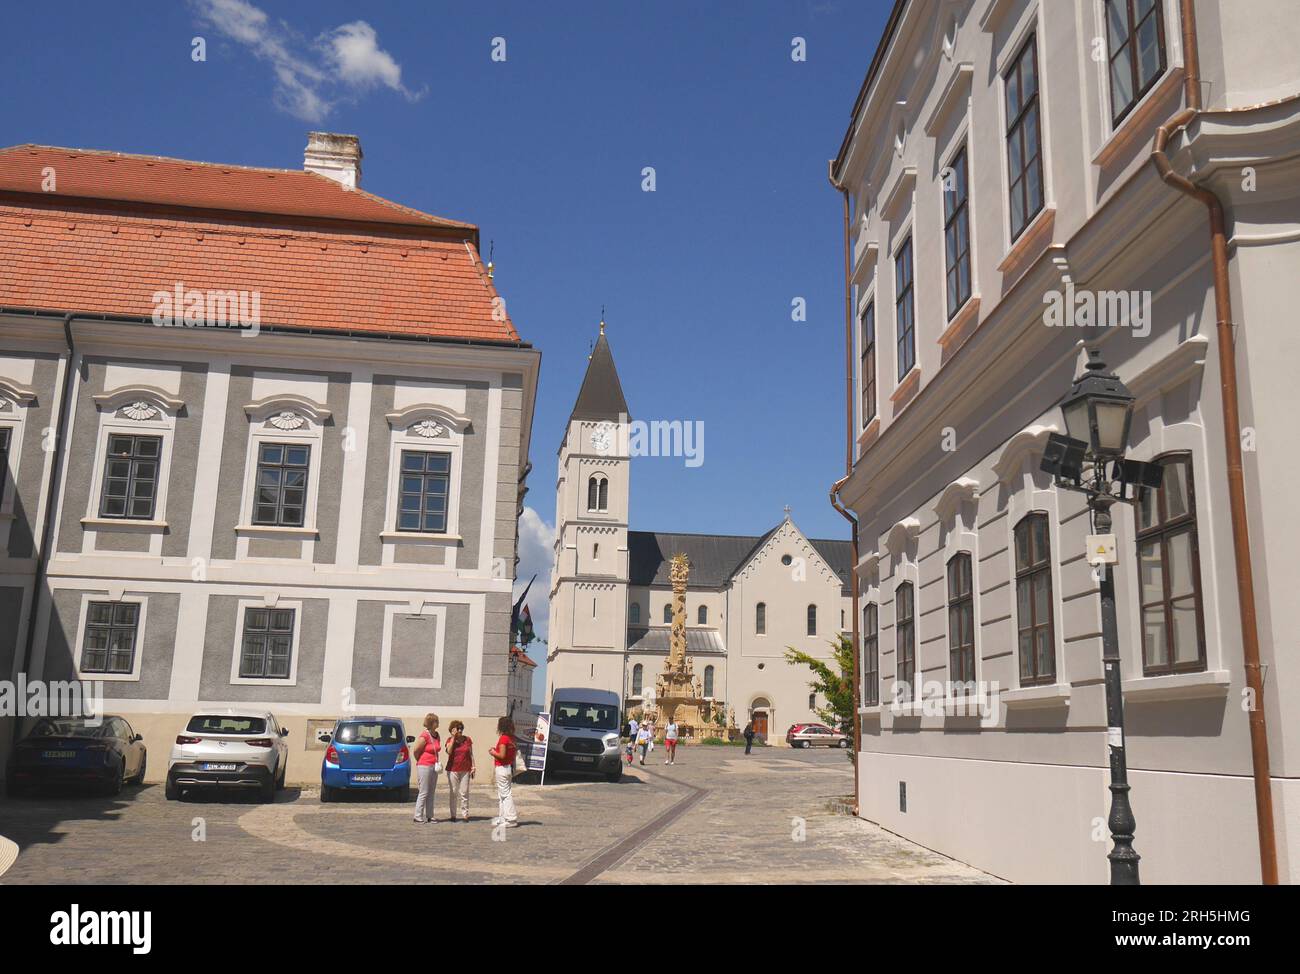 Looking along Var utca, Castle Street, towards Holy Trinity Square with St Michael’s Church and the Holy Trinity Column, Veszprem, Hungary Stock Photo